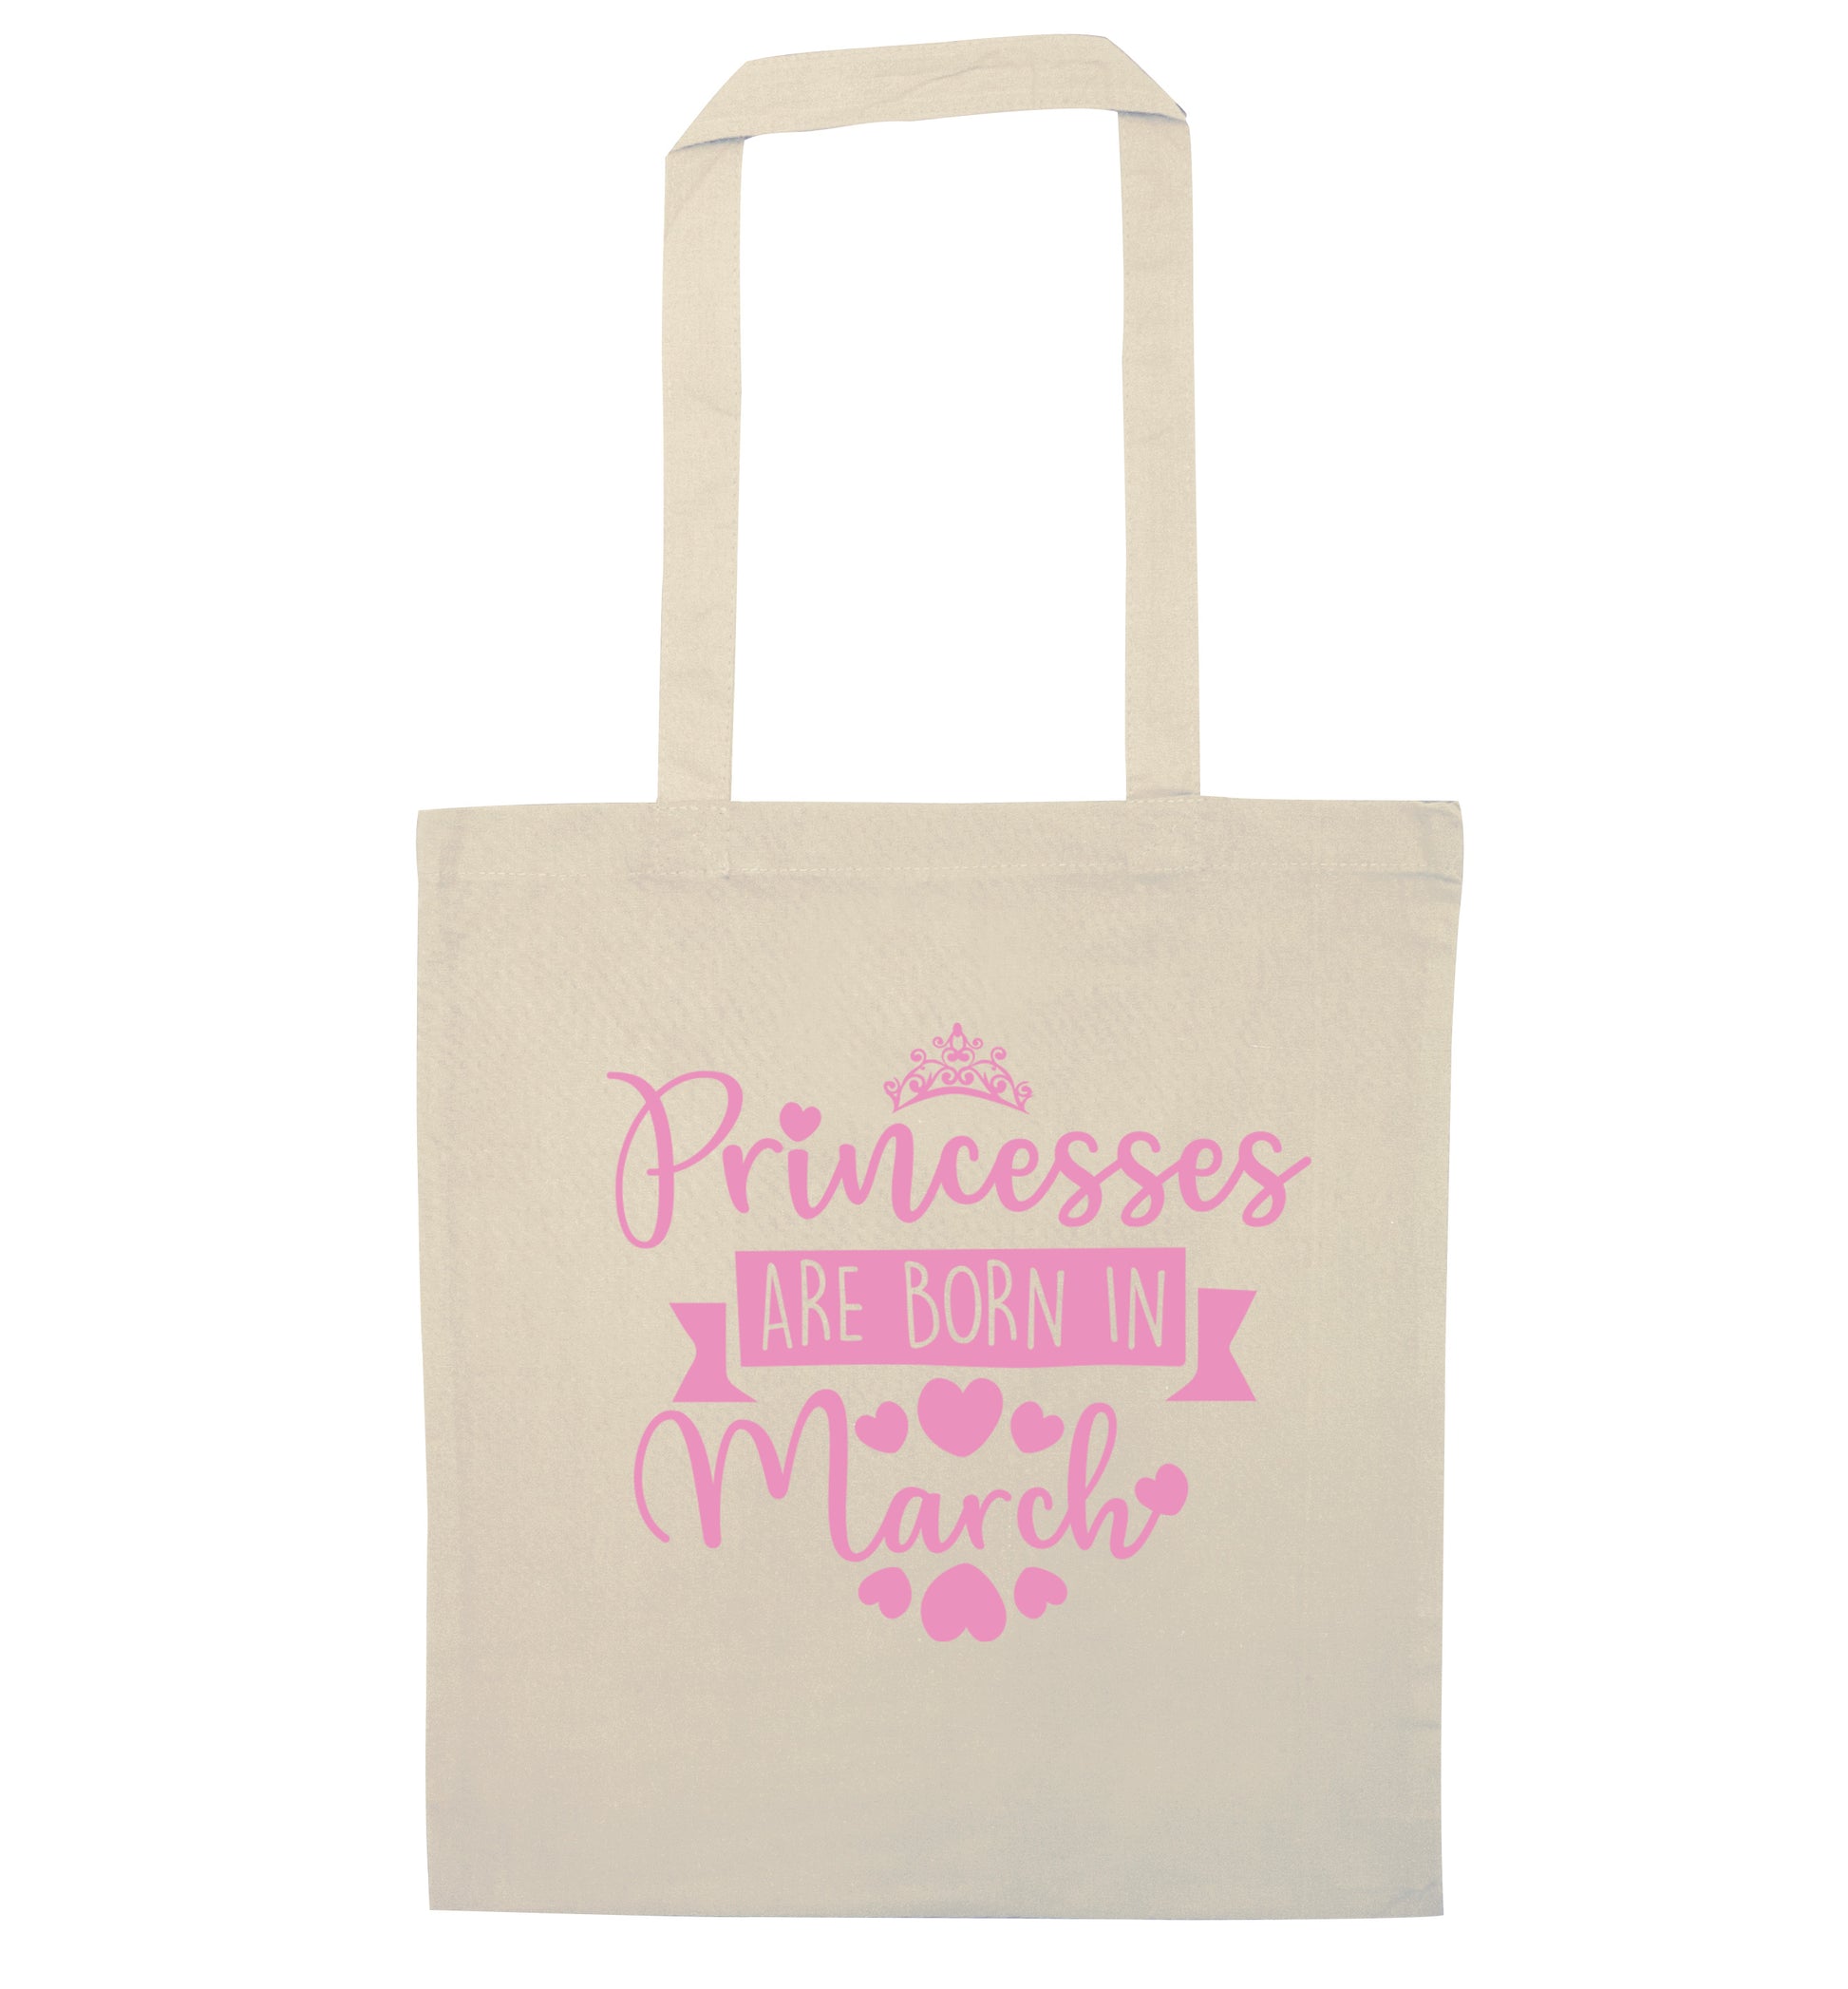 Princesses are born in March natural tote bag